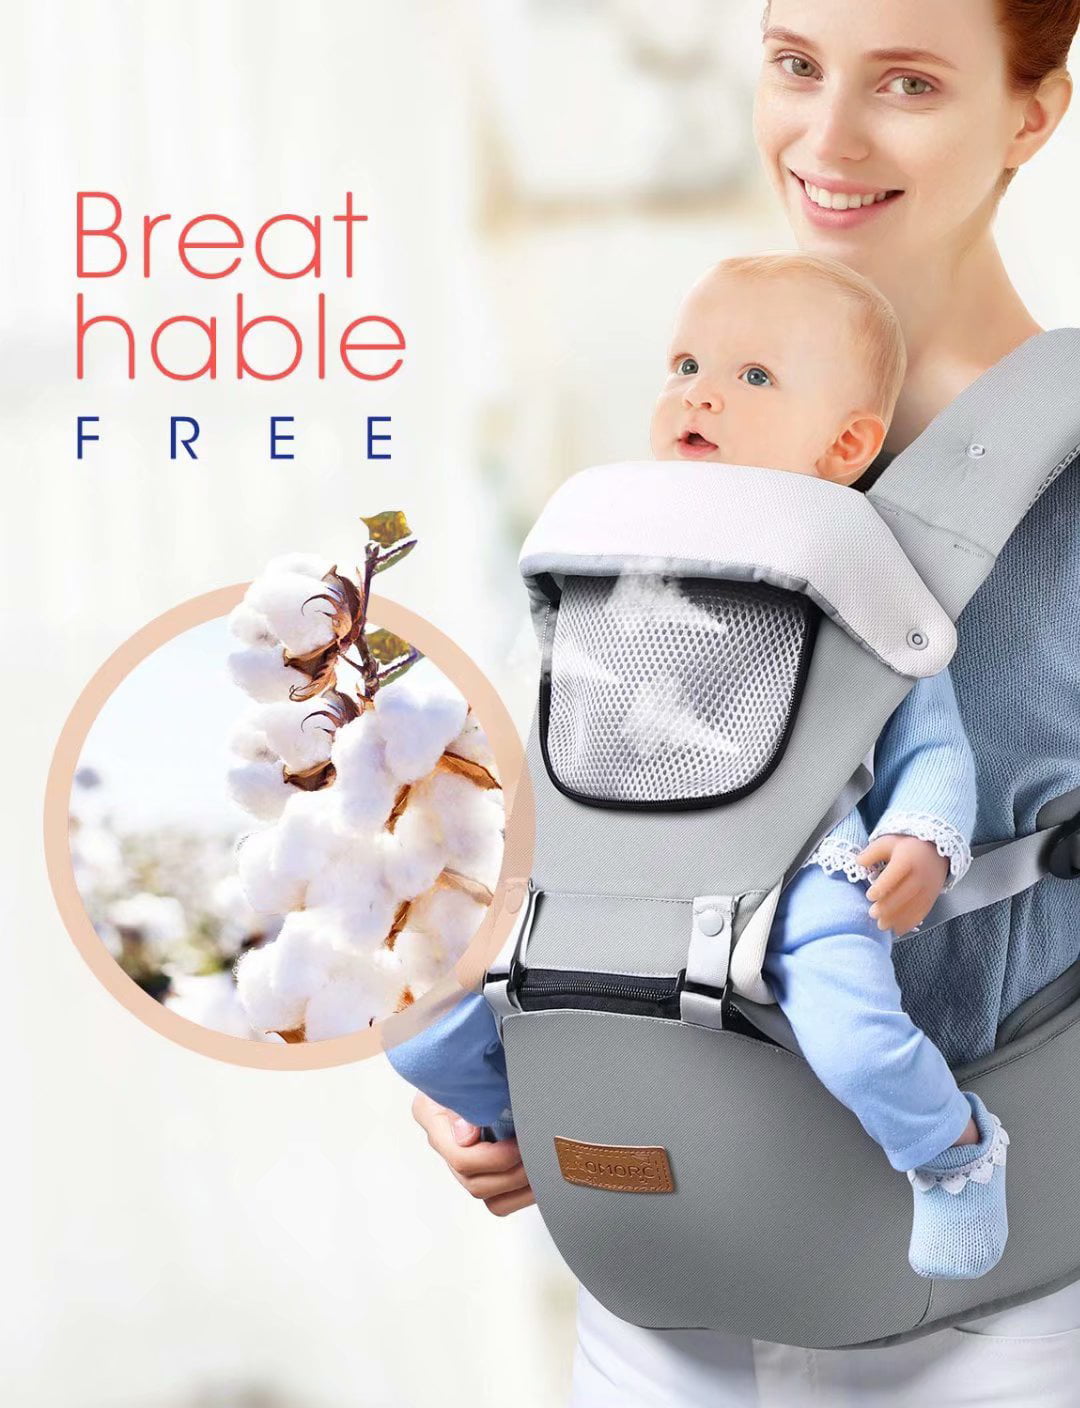 SORBEBE Korea Premium Infant Newborn Adjustable Baby Wrap Carrier Sling Hip Seat 